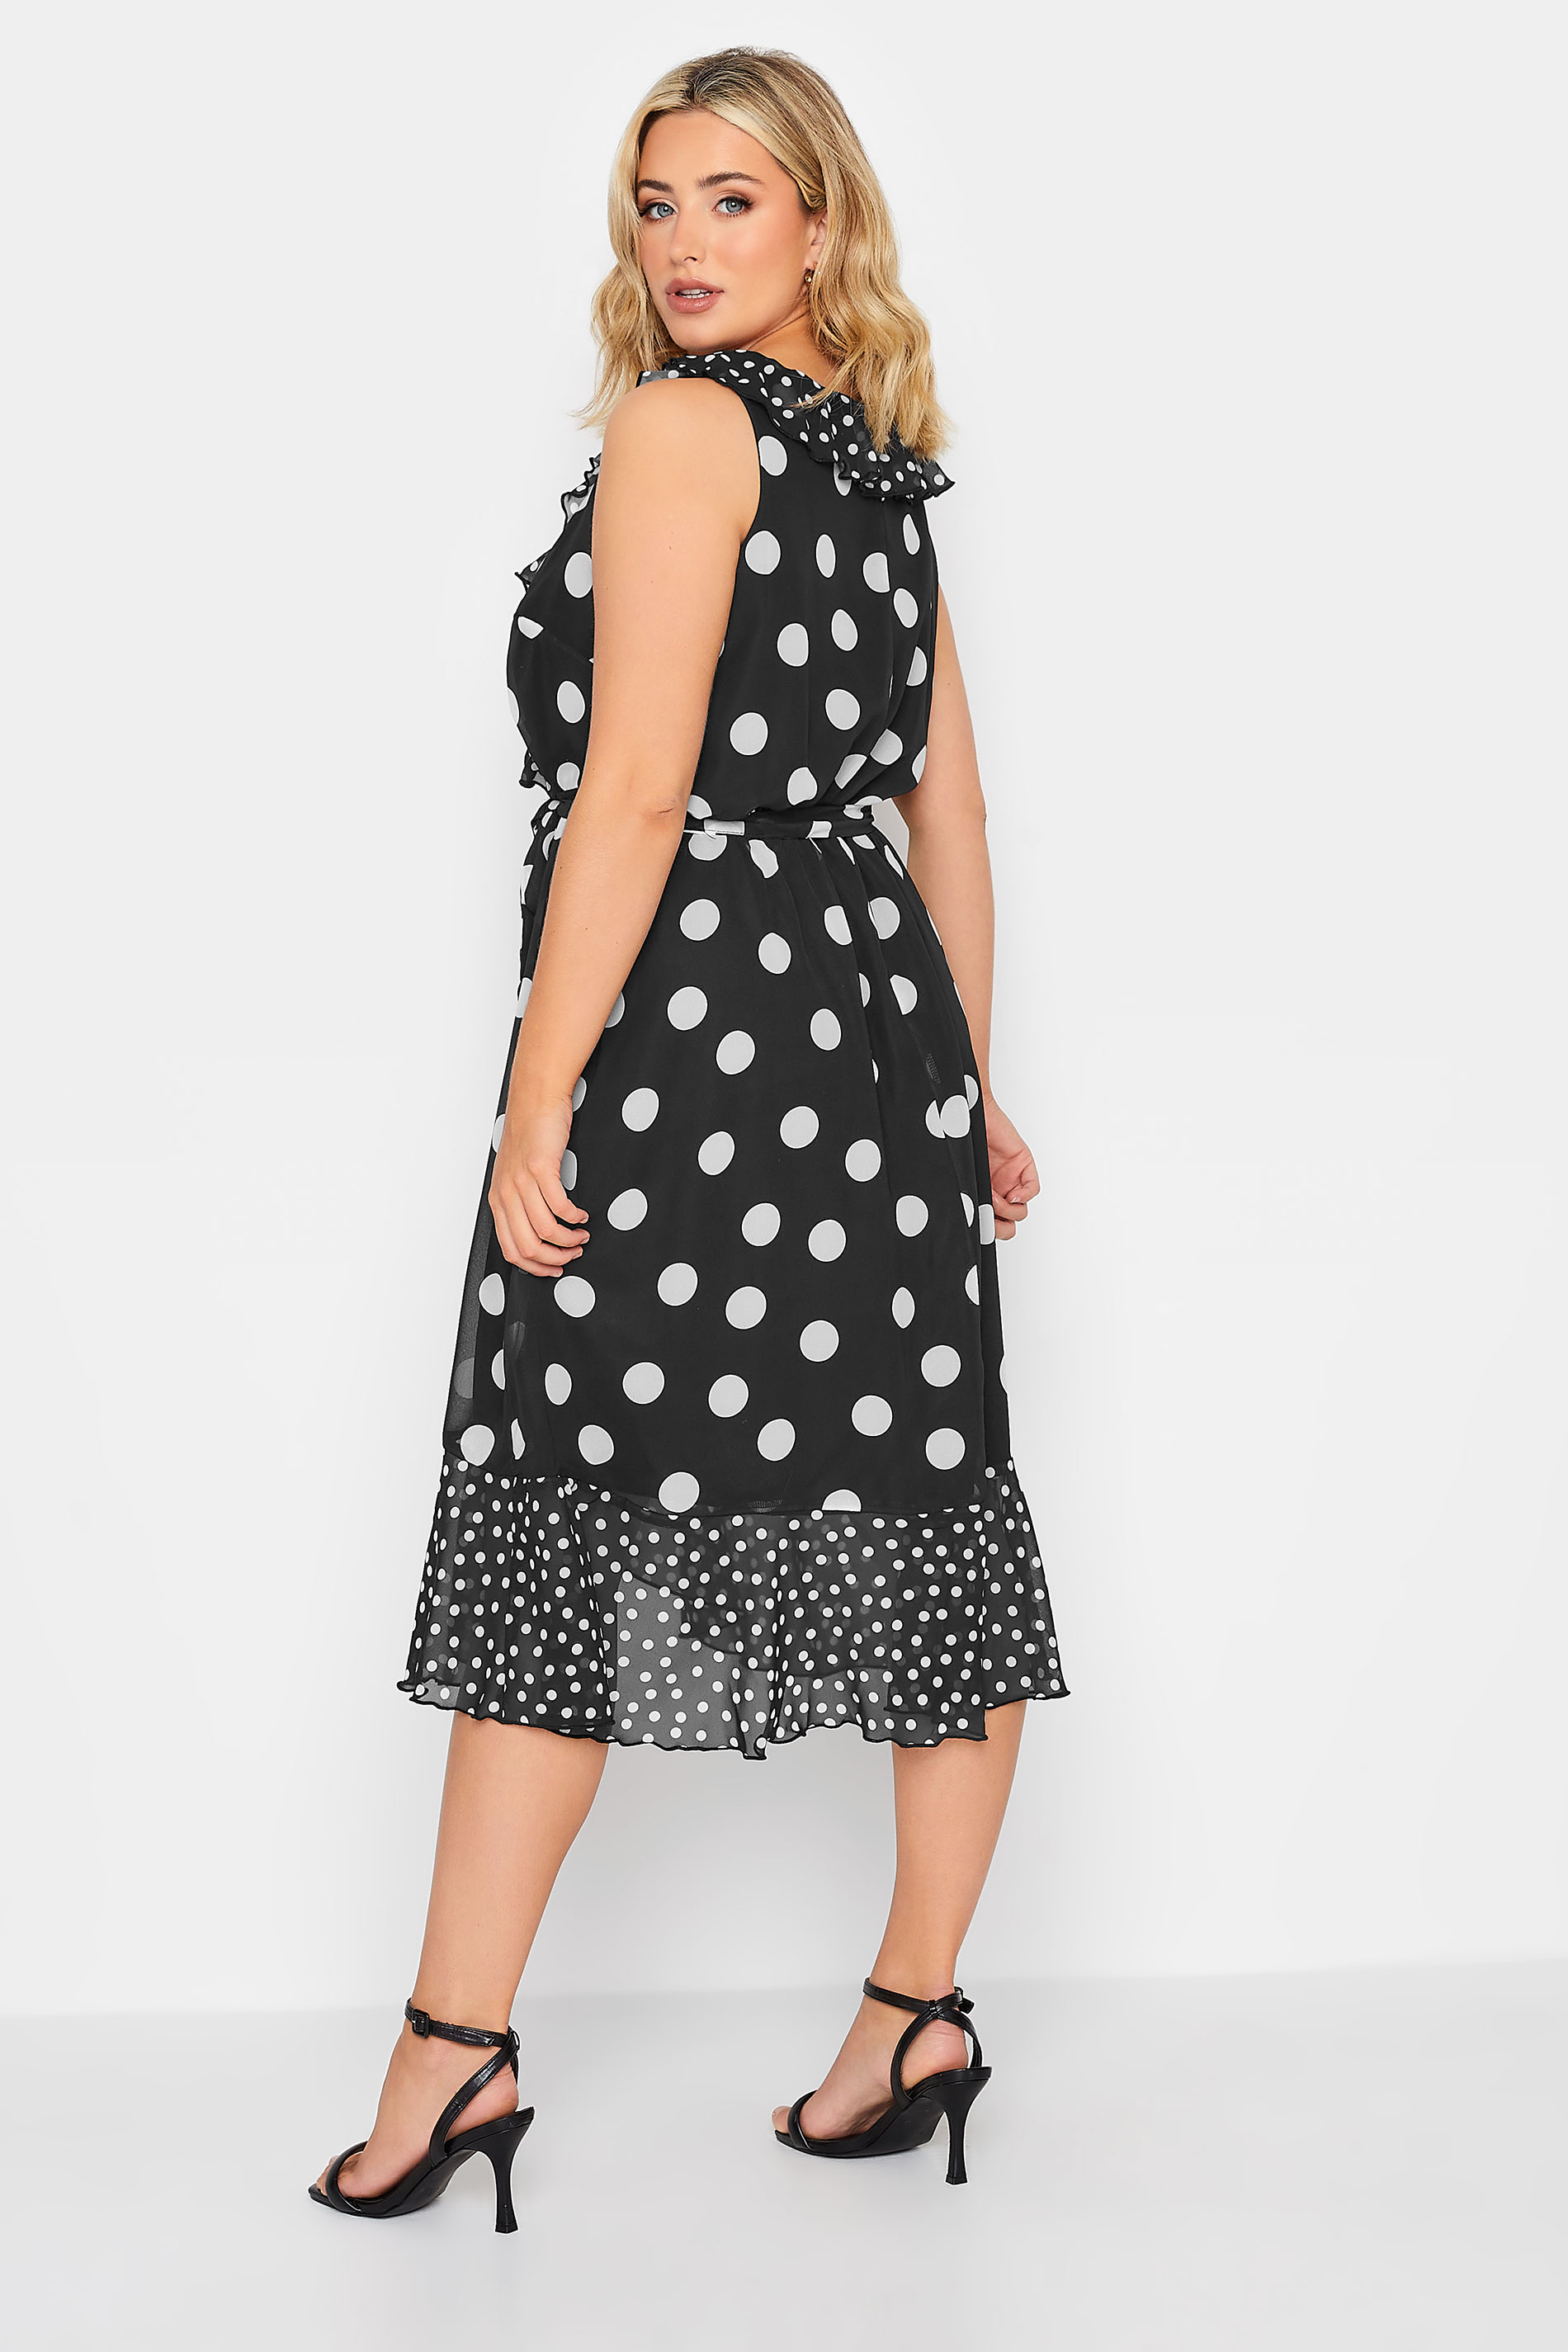 YOURS LONDON Curve Plus Size Black Polka Dot Print Double Ruffle Wrap Dress | Yours Clothing  3